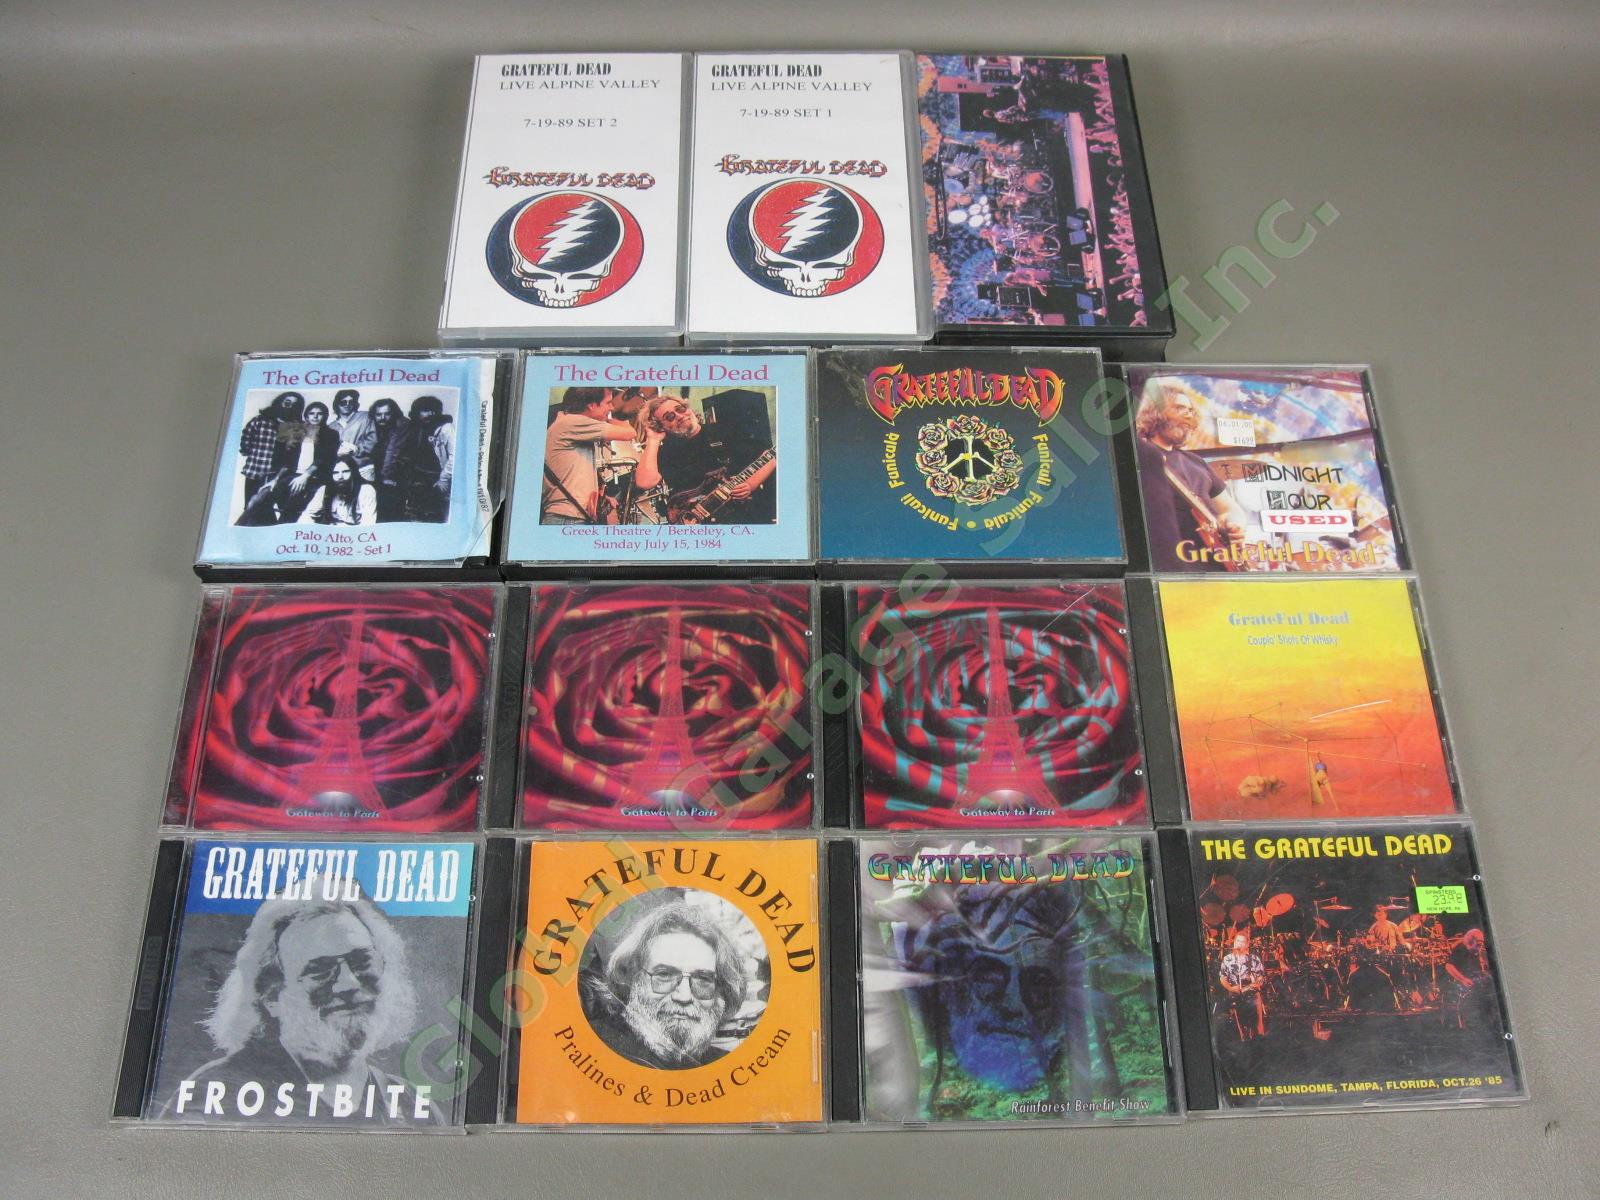 Rare Vtg 1970s 1980s Grateful Dead Unreleased Live CD + VHS Lot 20 Discs Imports